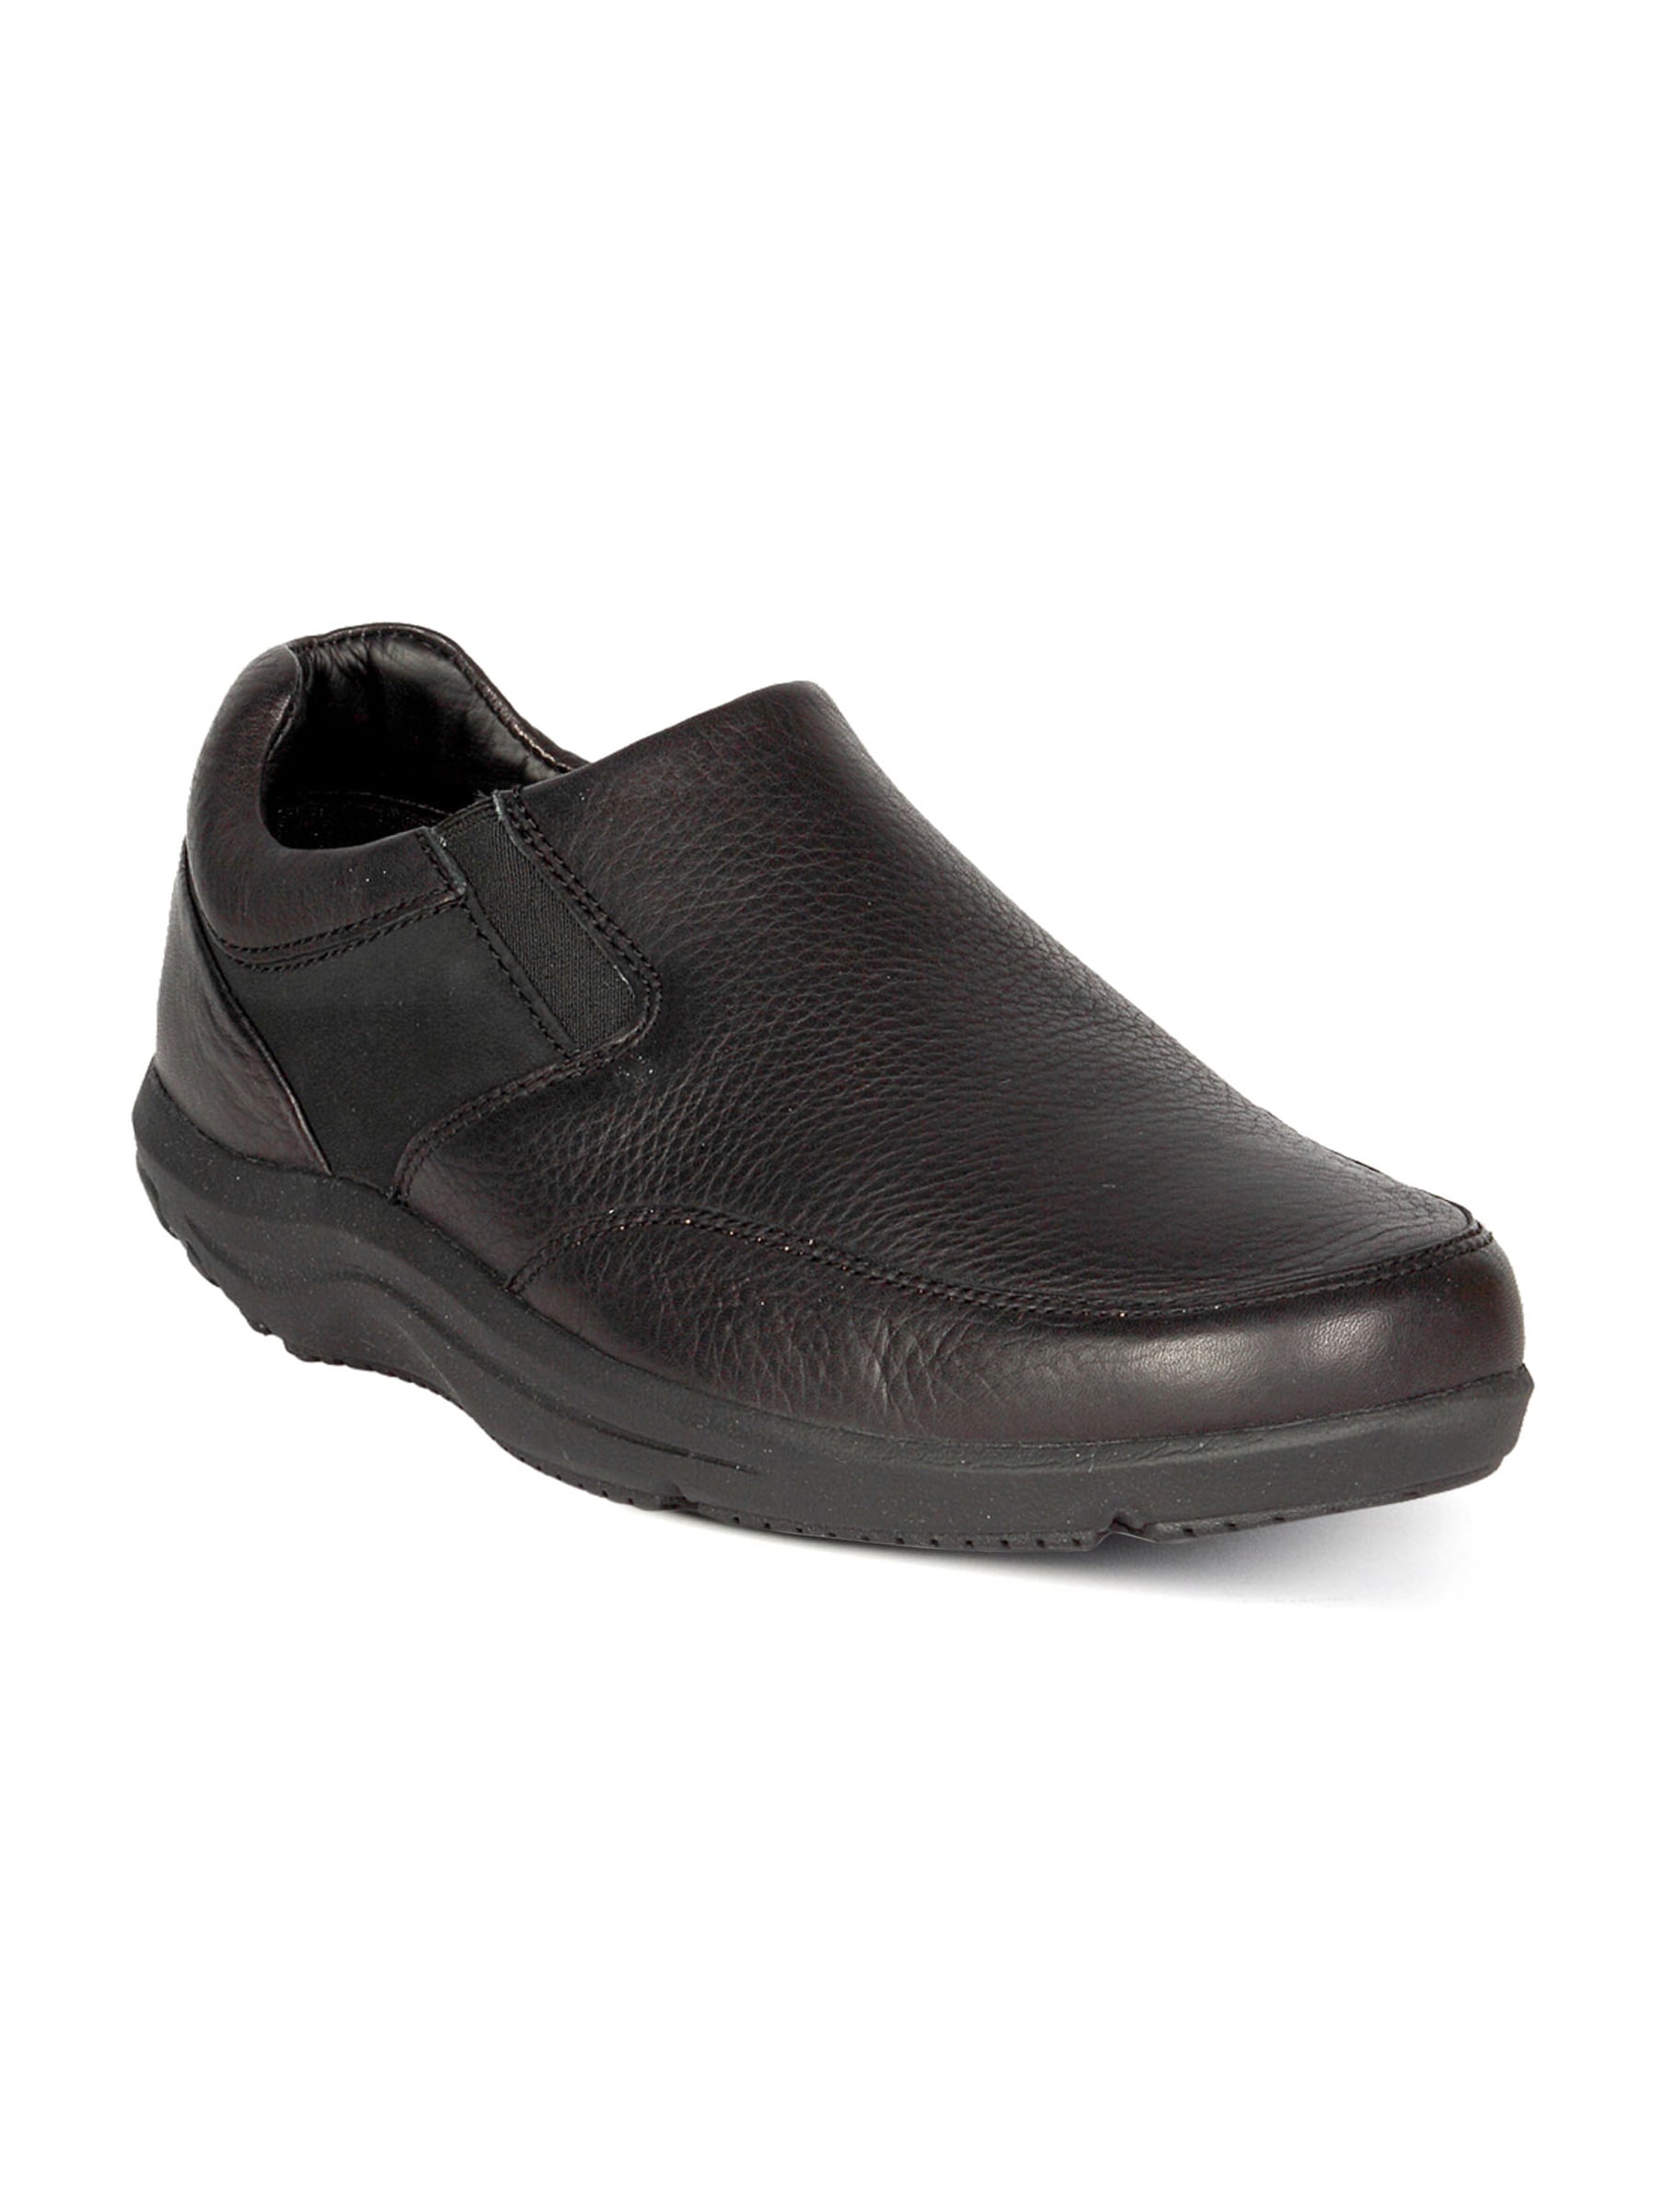 Rockport Men's Tyson Black Shoe